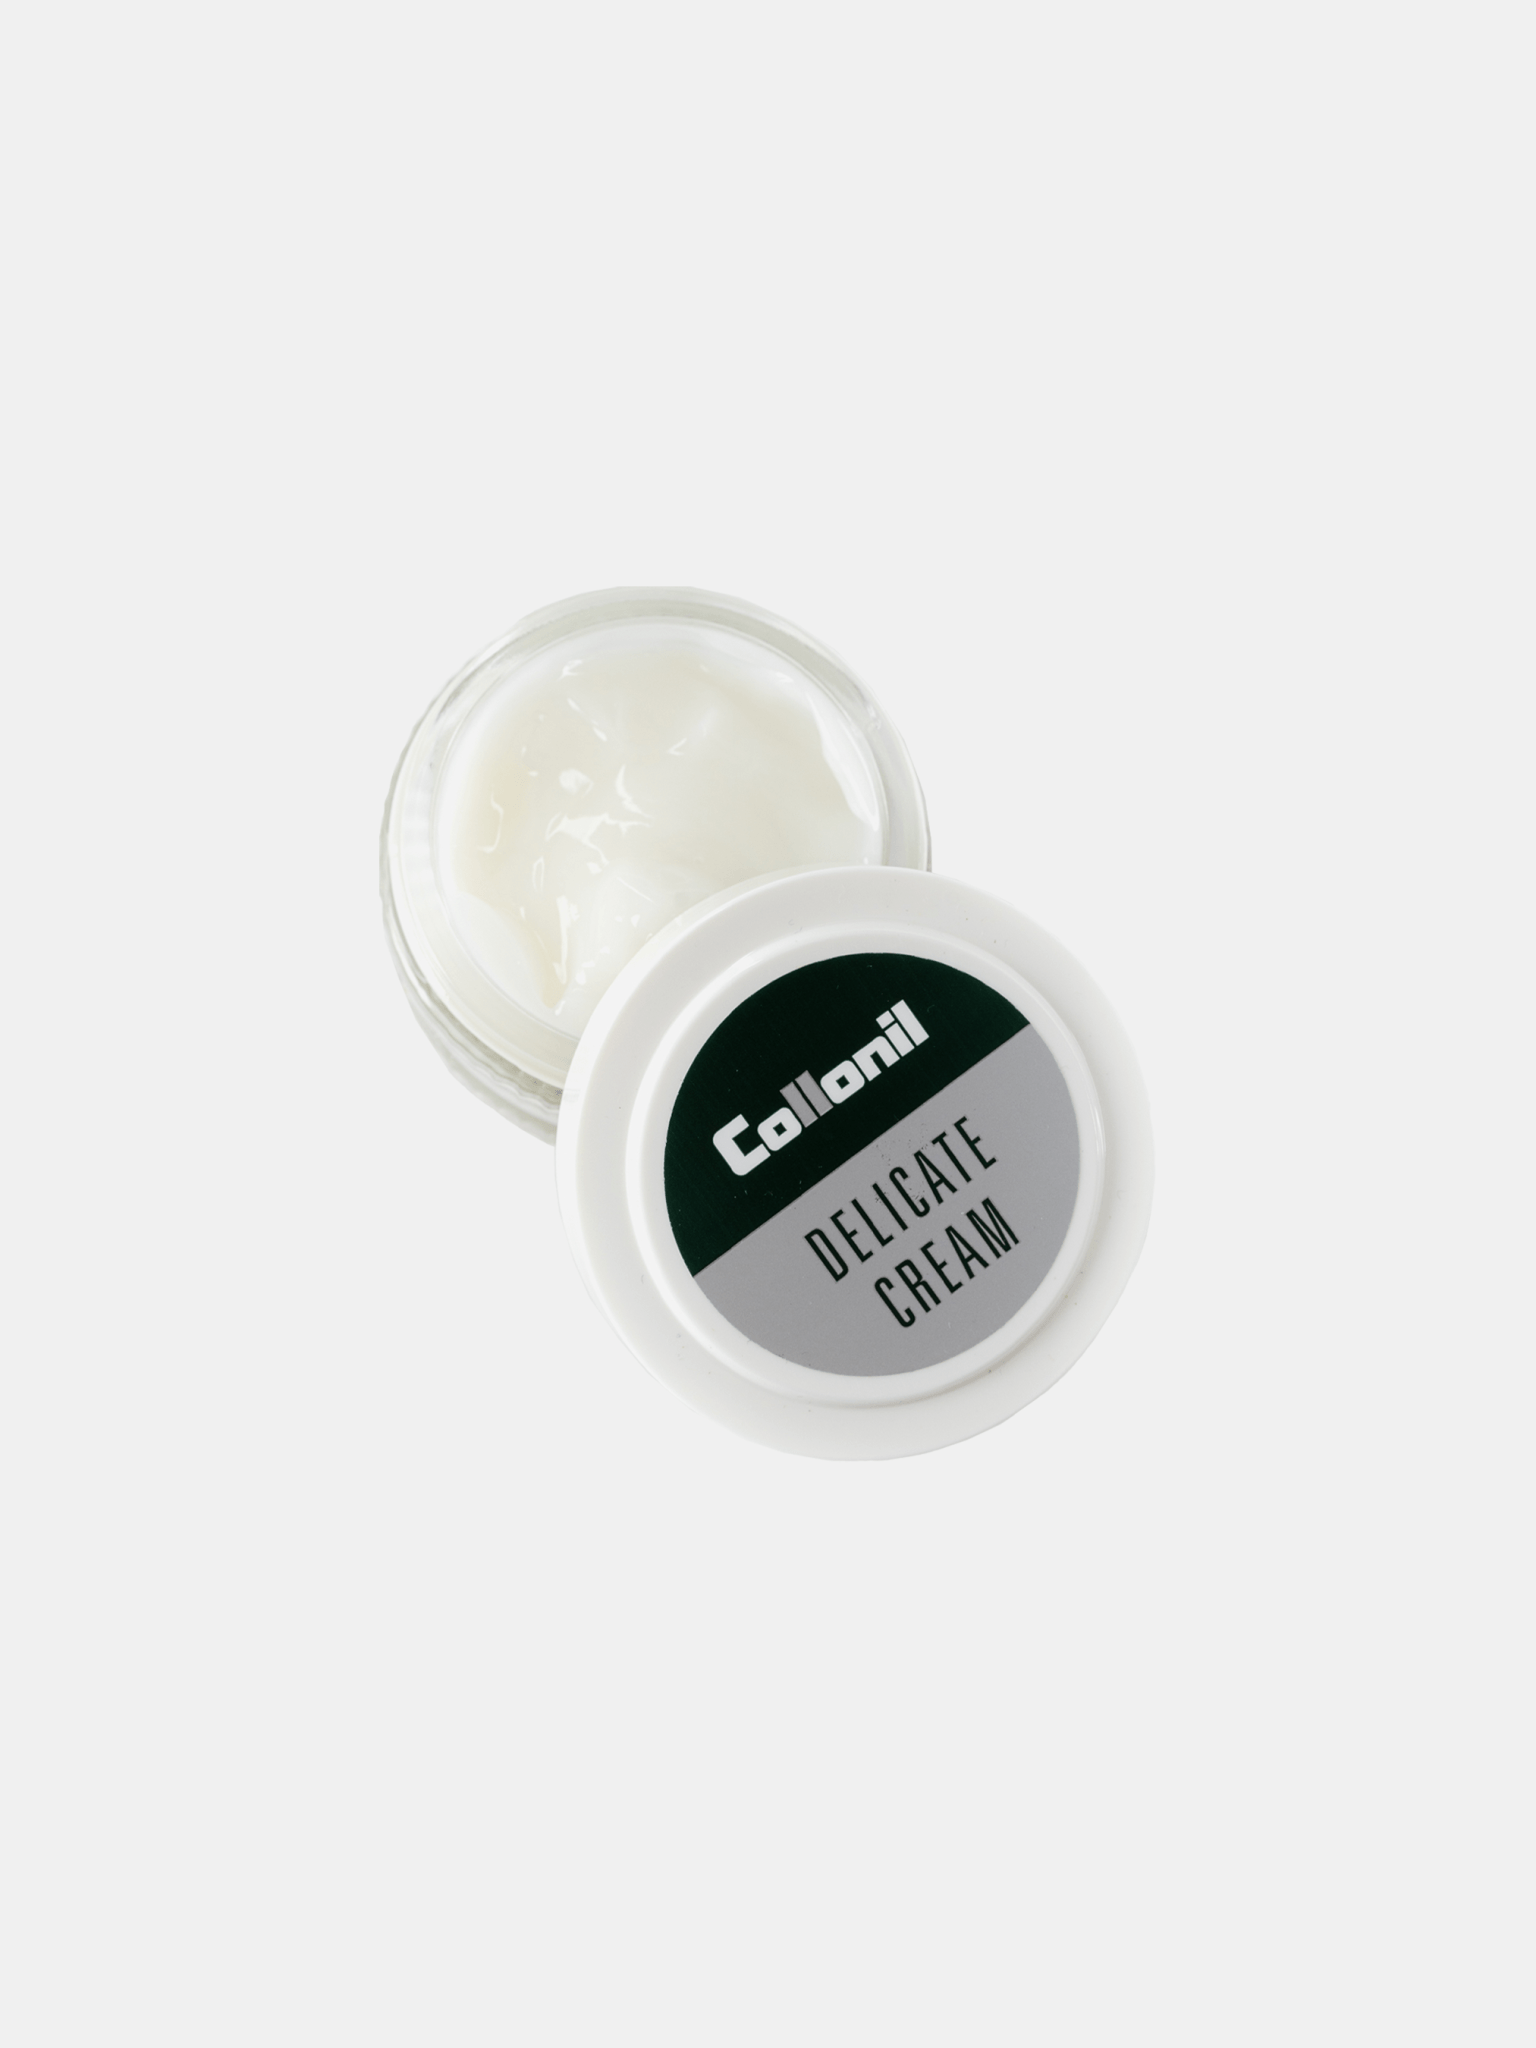 The Collonil Delicate Cream - 50ml - Cambridge Satchel US Store